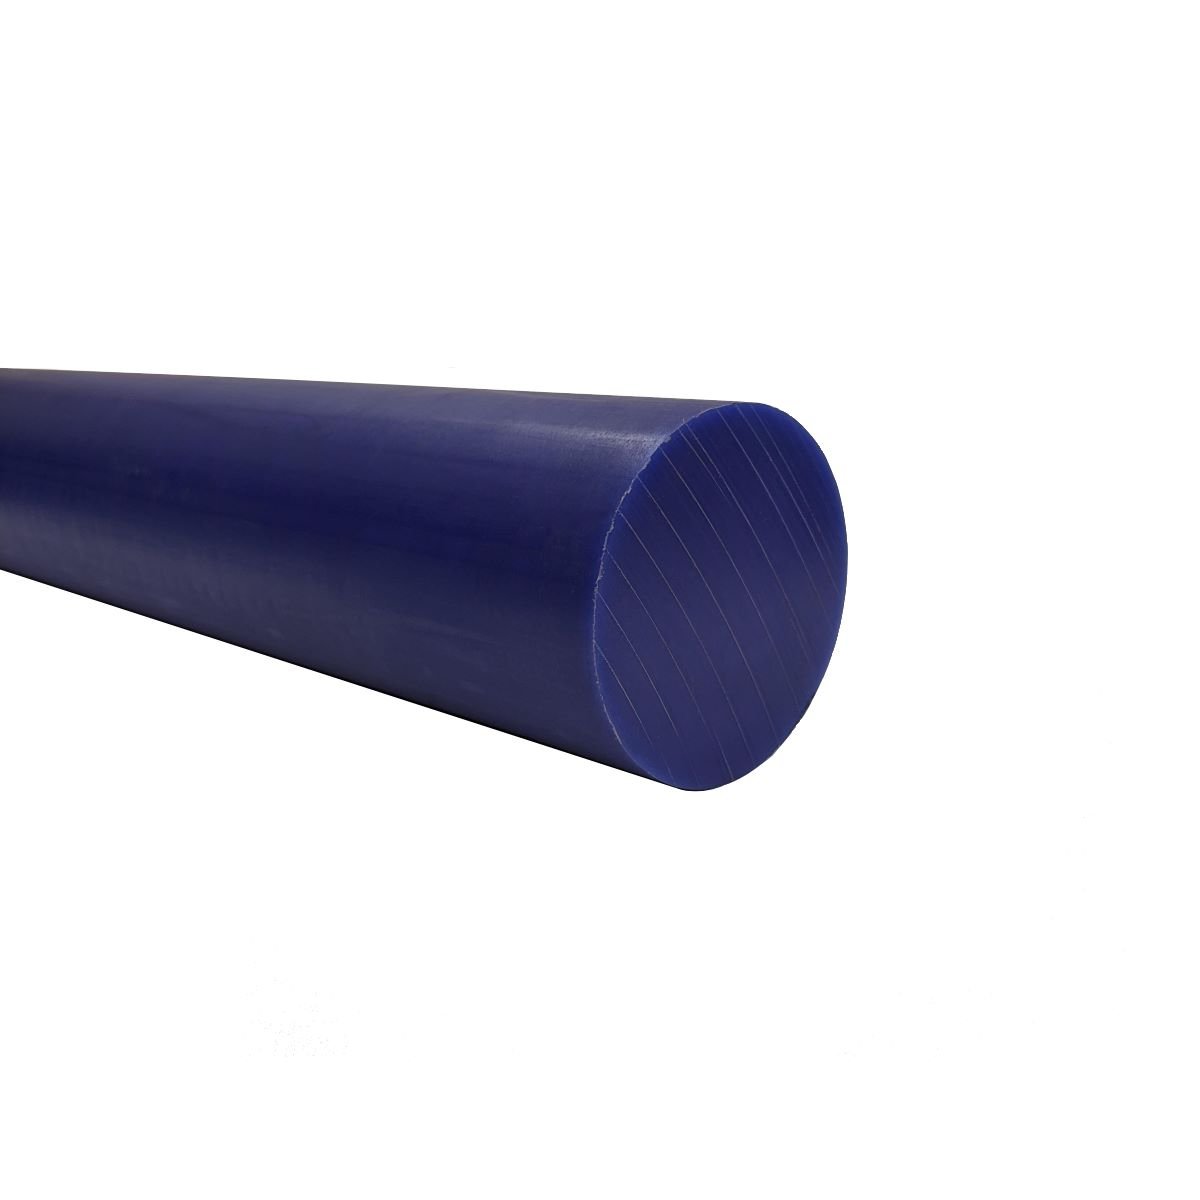 UHMW Rod | Blue Colored UHMW Rods (FDA Compliant)